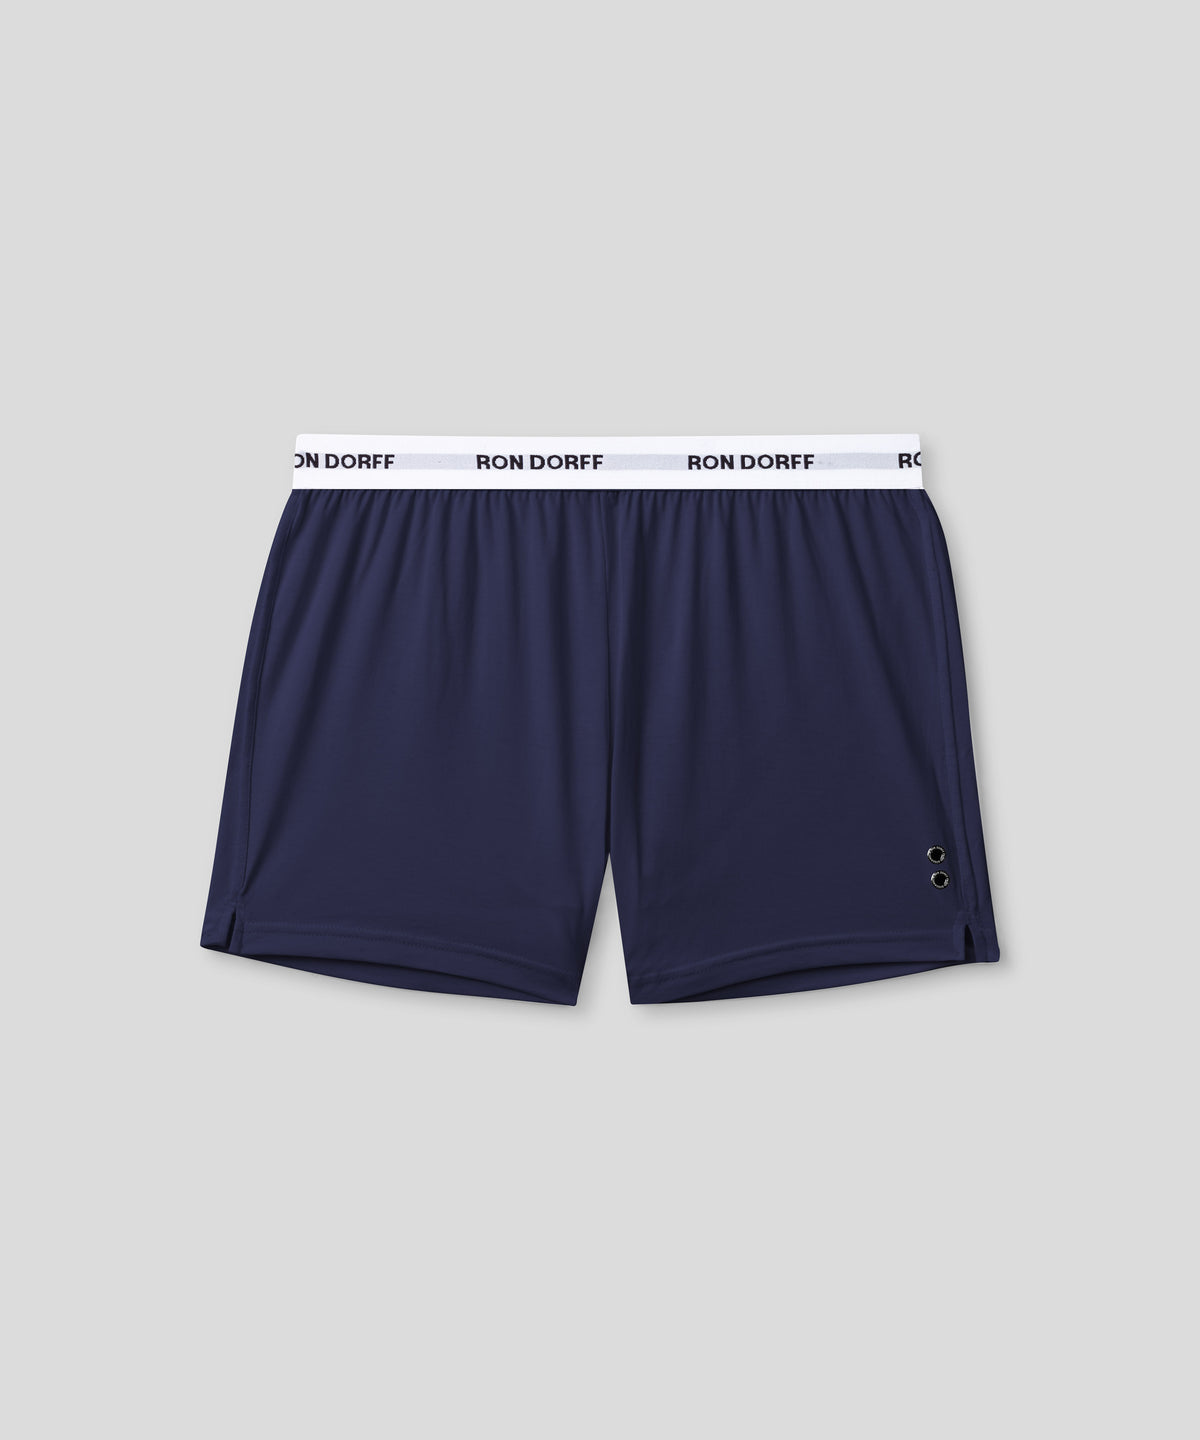 RON DORFF Pyjama Shorts: Navy